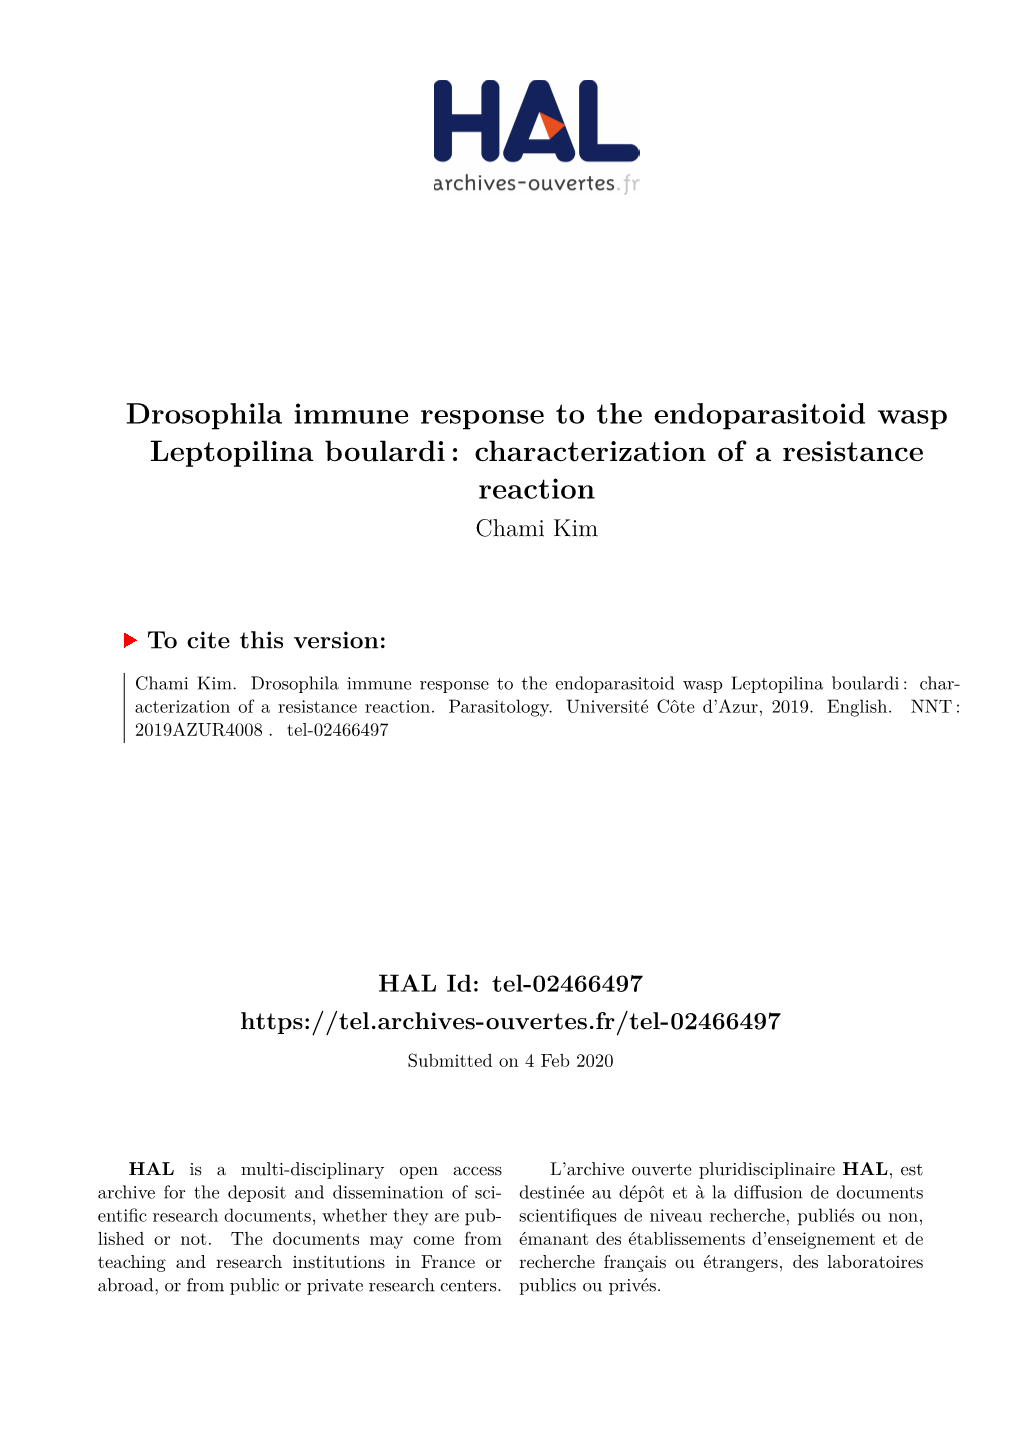 Drosophila Immune Response to the Endoparasitoid Wasp Leptopilina Boulardi : Characterization of a Resistance Reaction Chami Kim